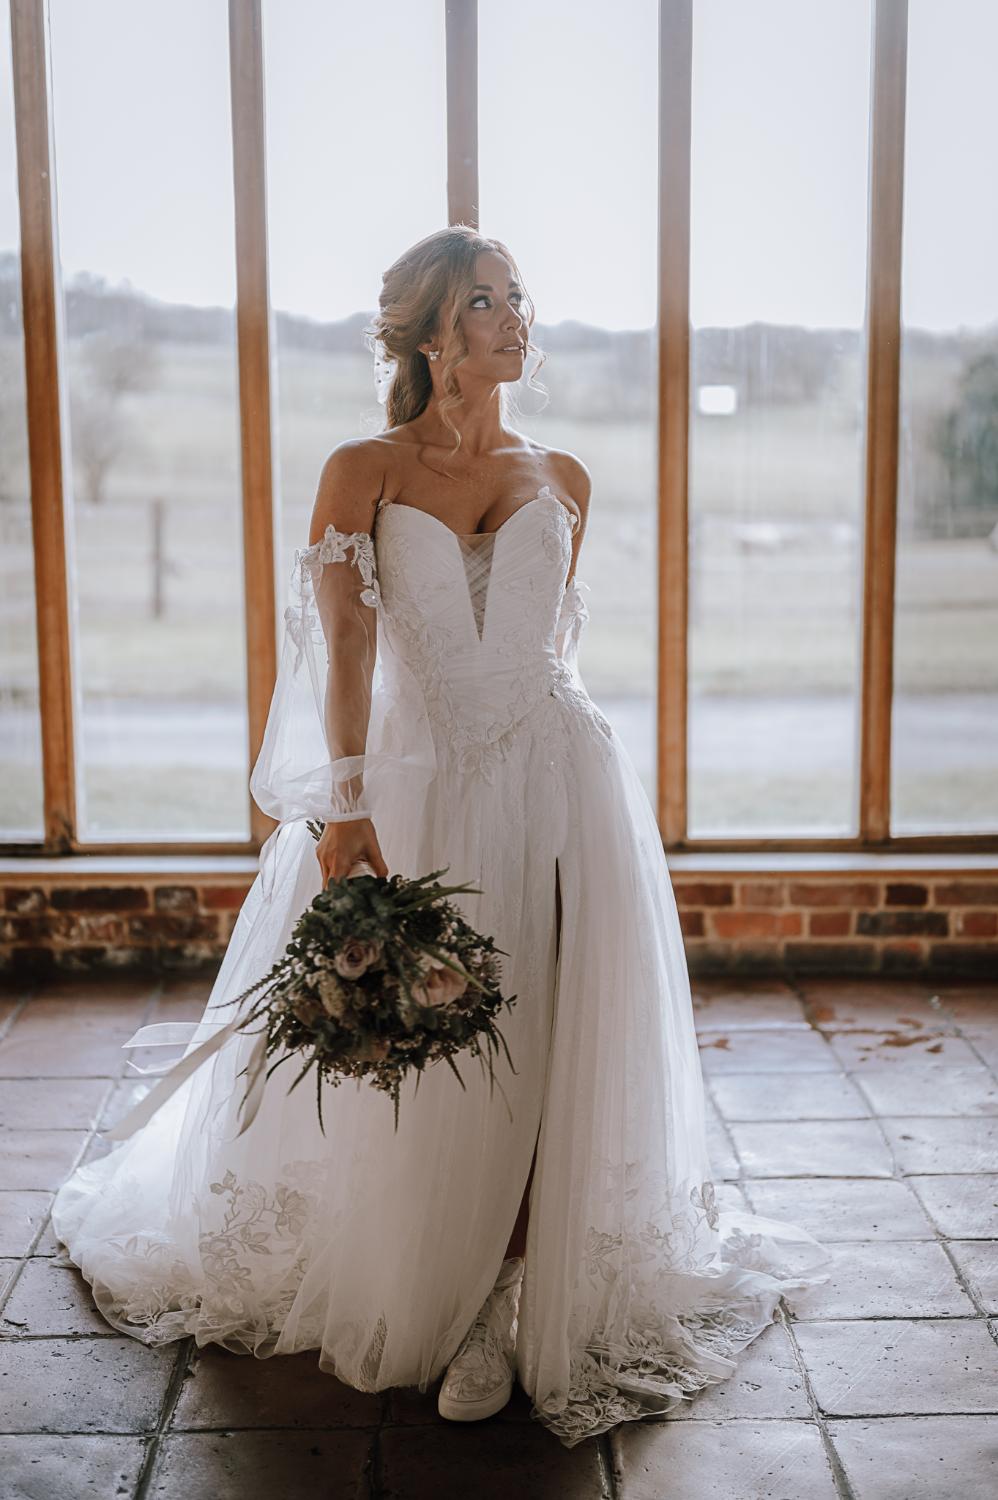 Alex Murphy Showcases Her Kay Heeley Wedding Dress